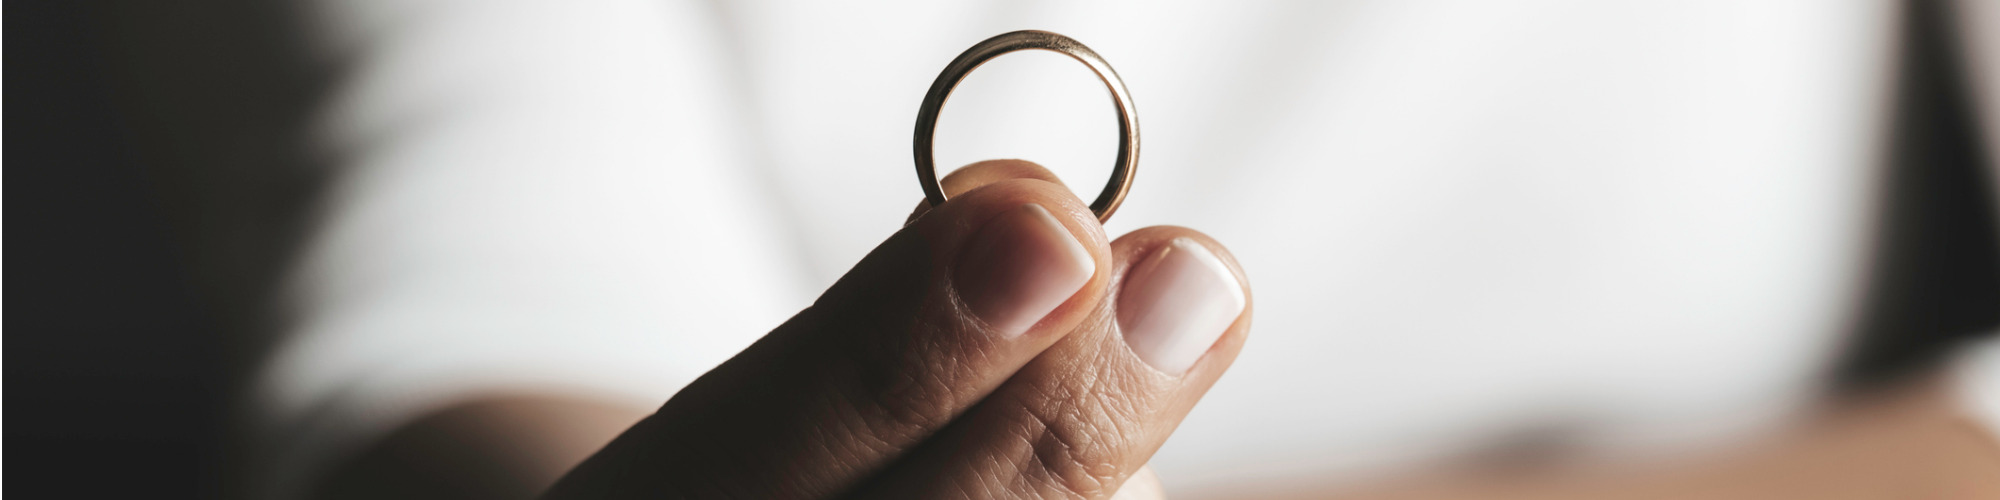 Divorce & ‘Silver Separators’ - The Unique Factors Explored 